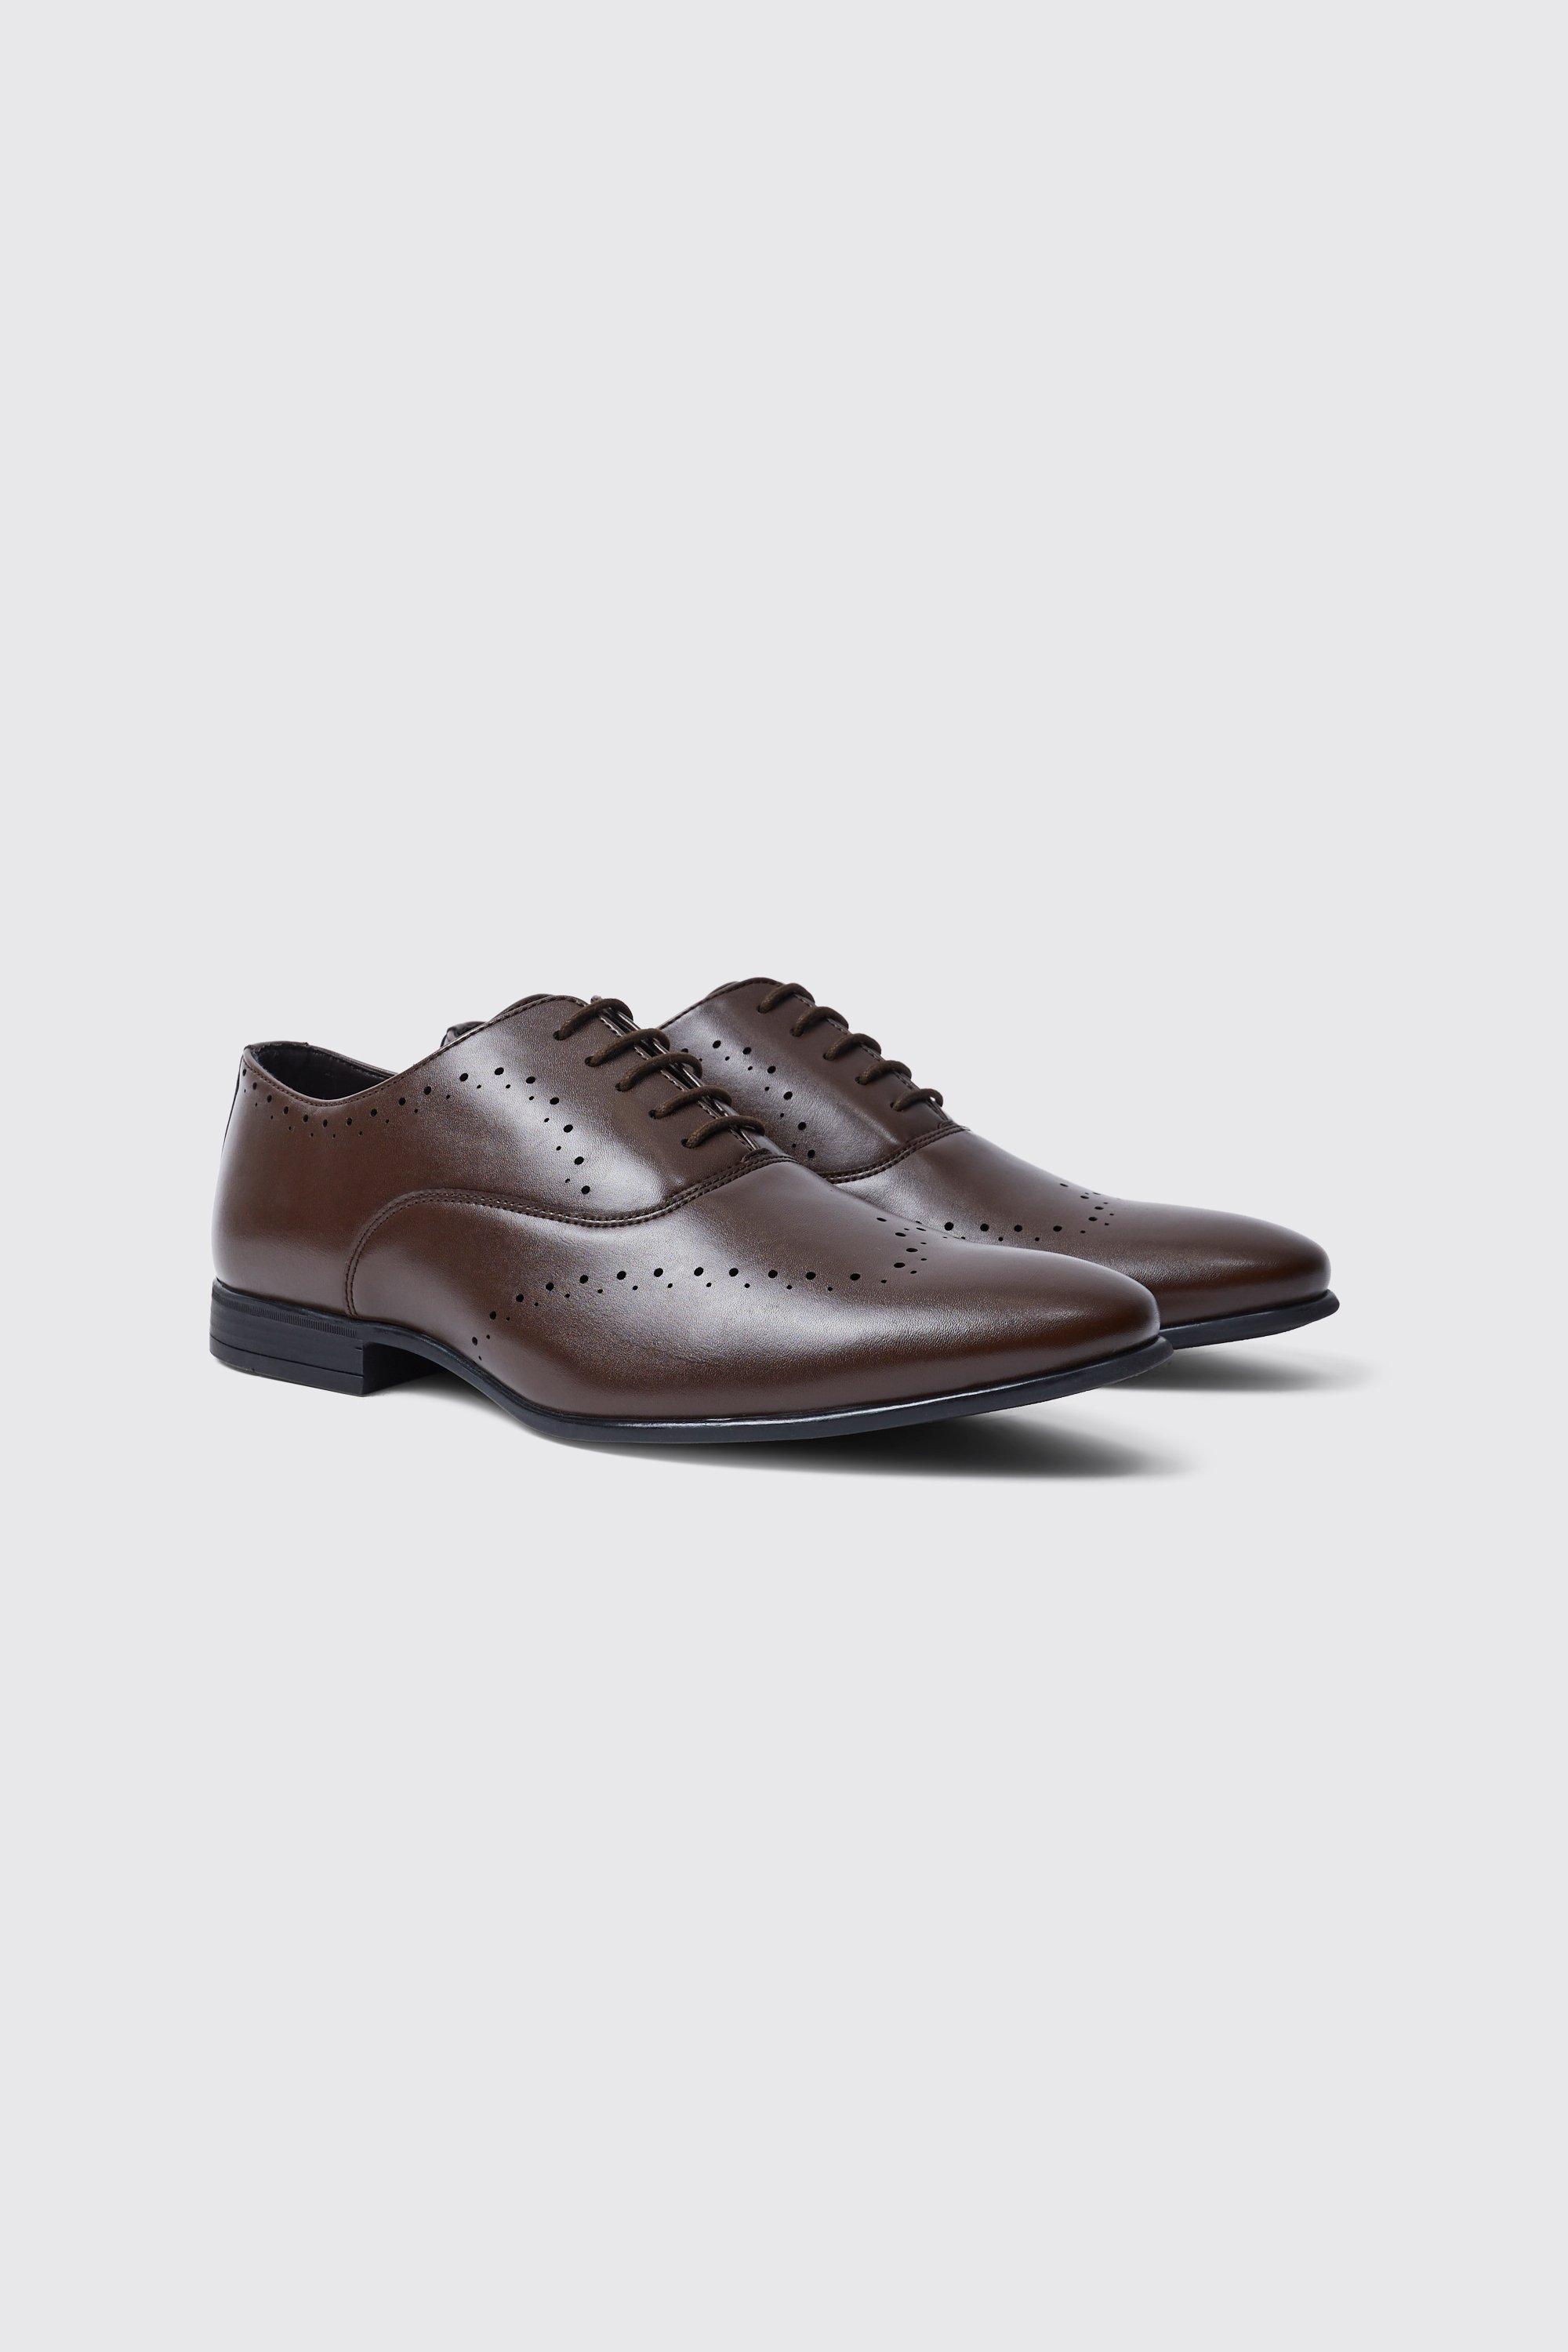 chaussures derby perforées homme - brun - 44, brun